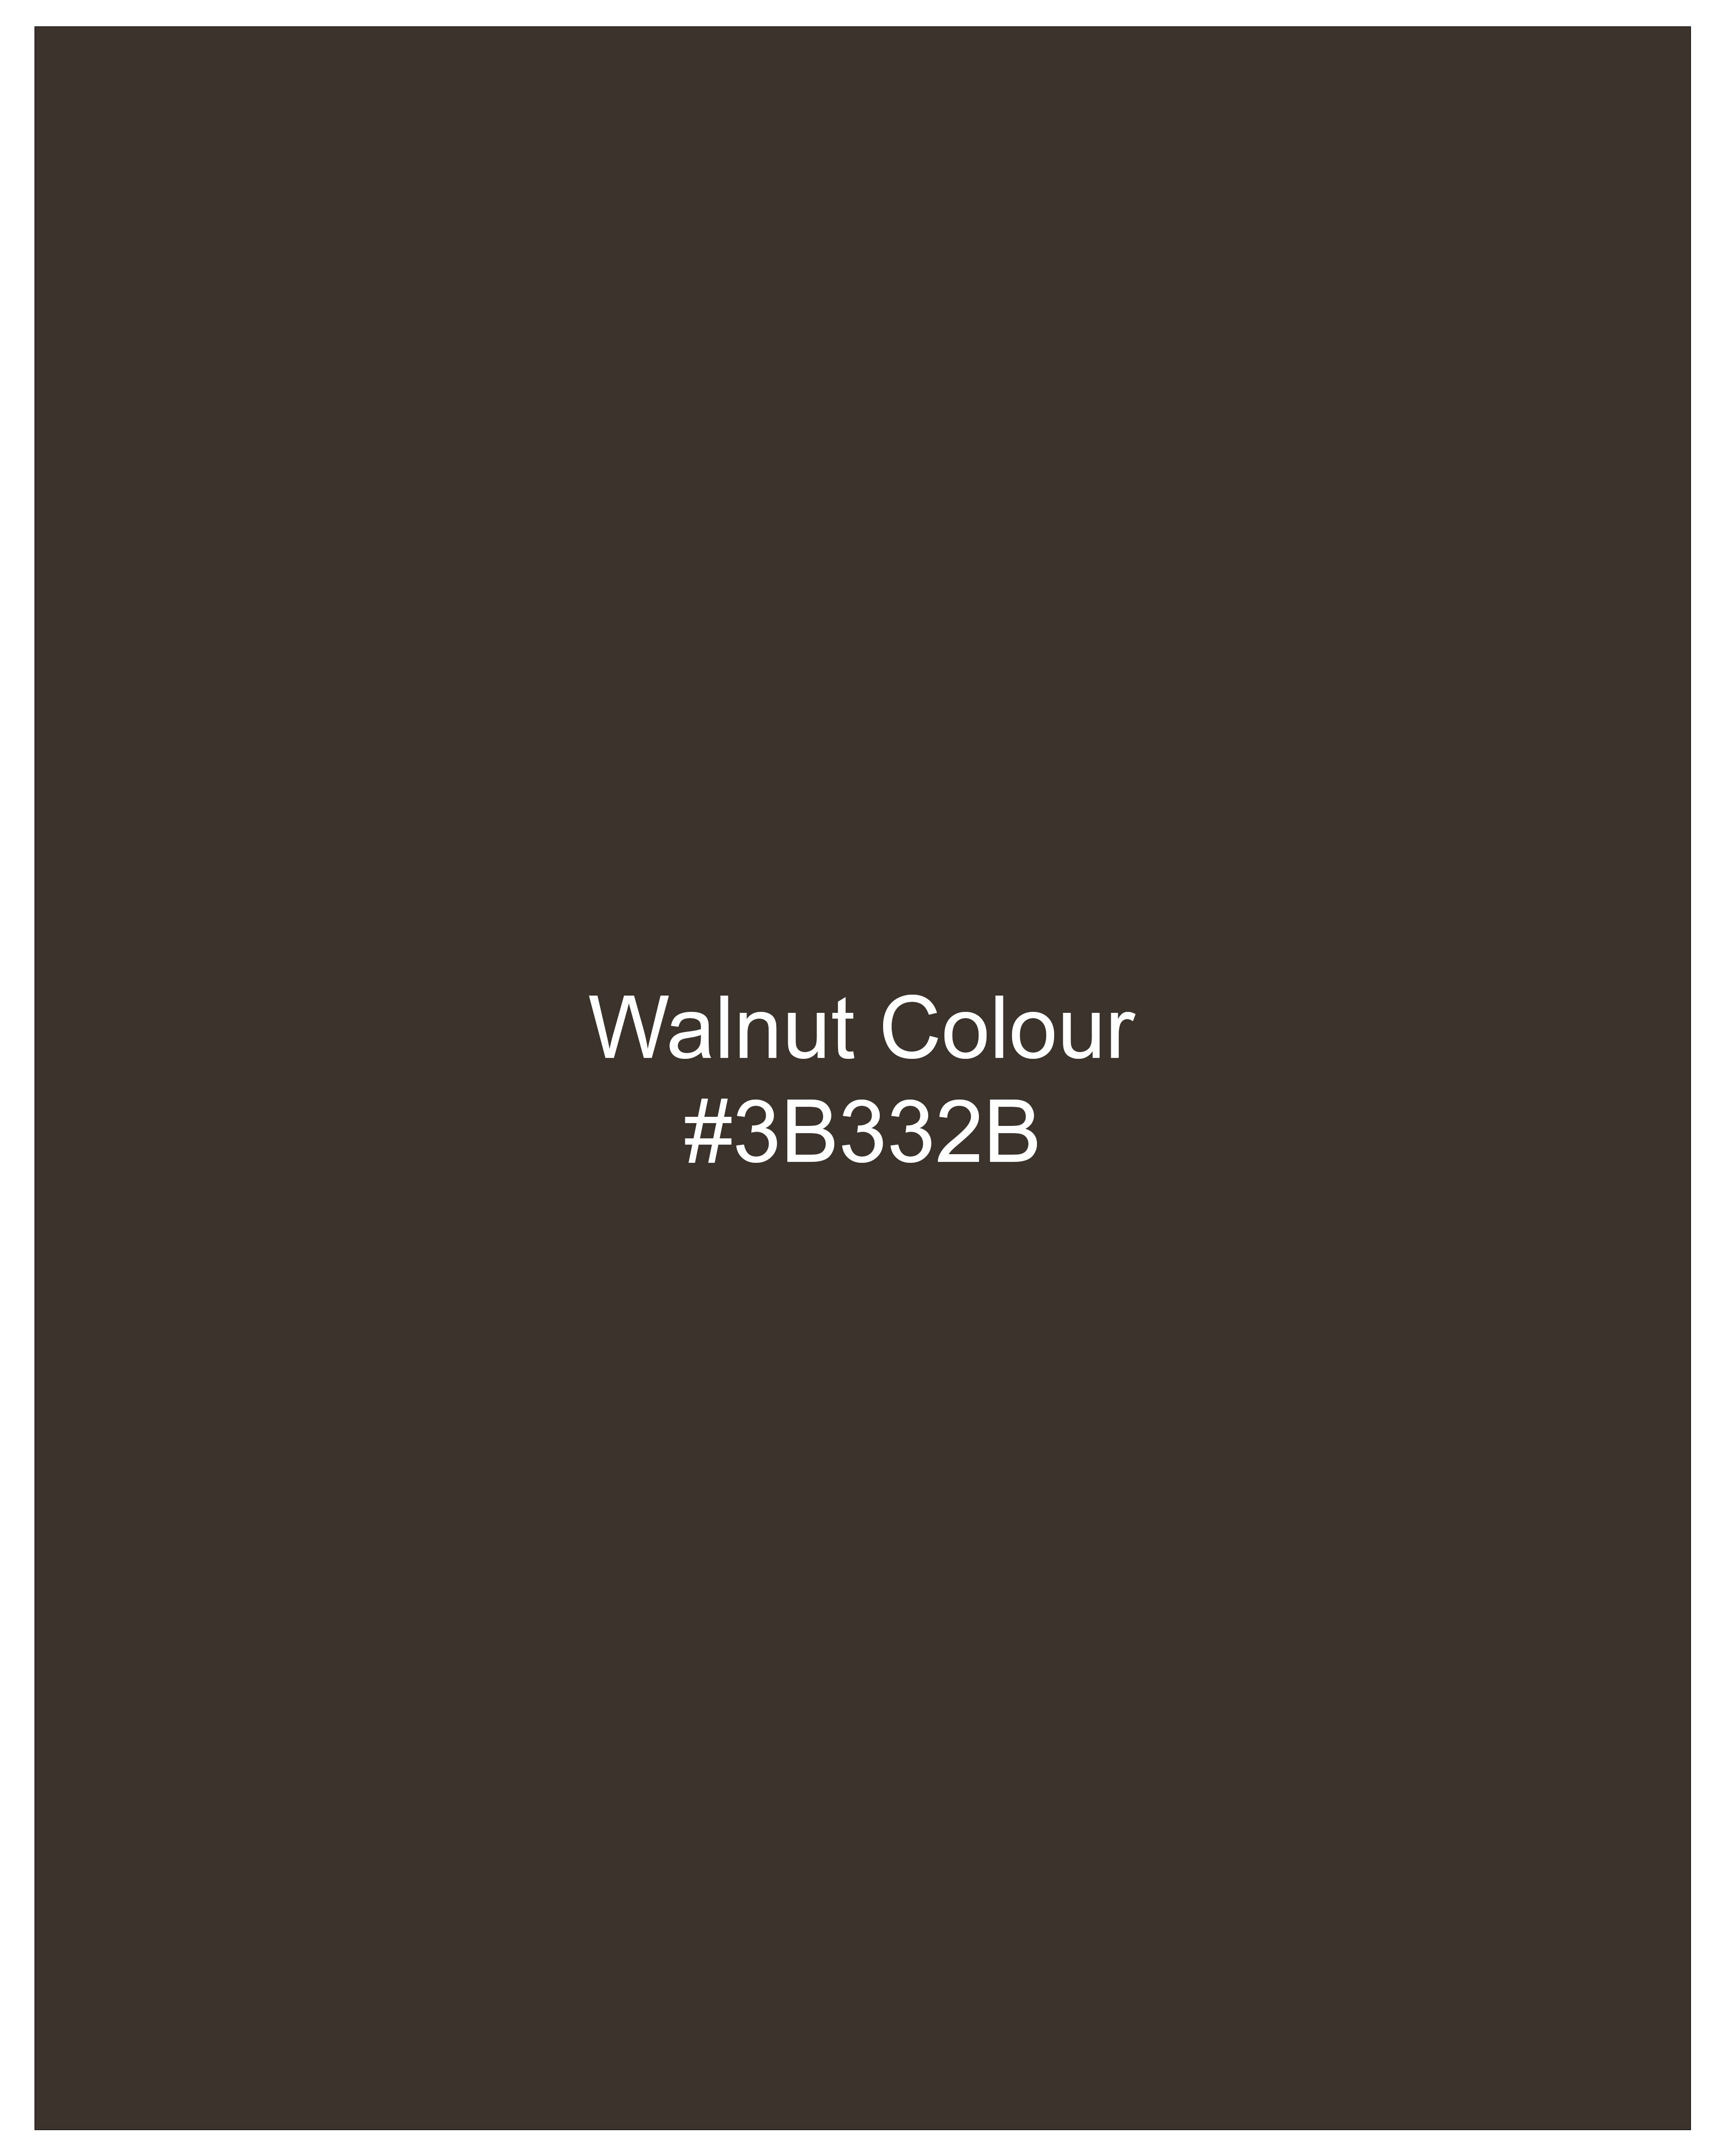 Walnut Brown Solid Stretchable Premium Cotton traveler Pant T2627-28, T2627-30, T2627-32, T2627-34, T2627-36, T2627-38, T2627-40, T2627-42, T2627-44